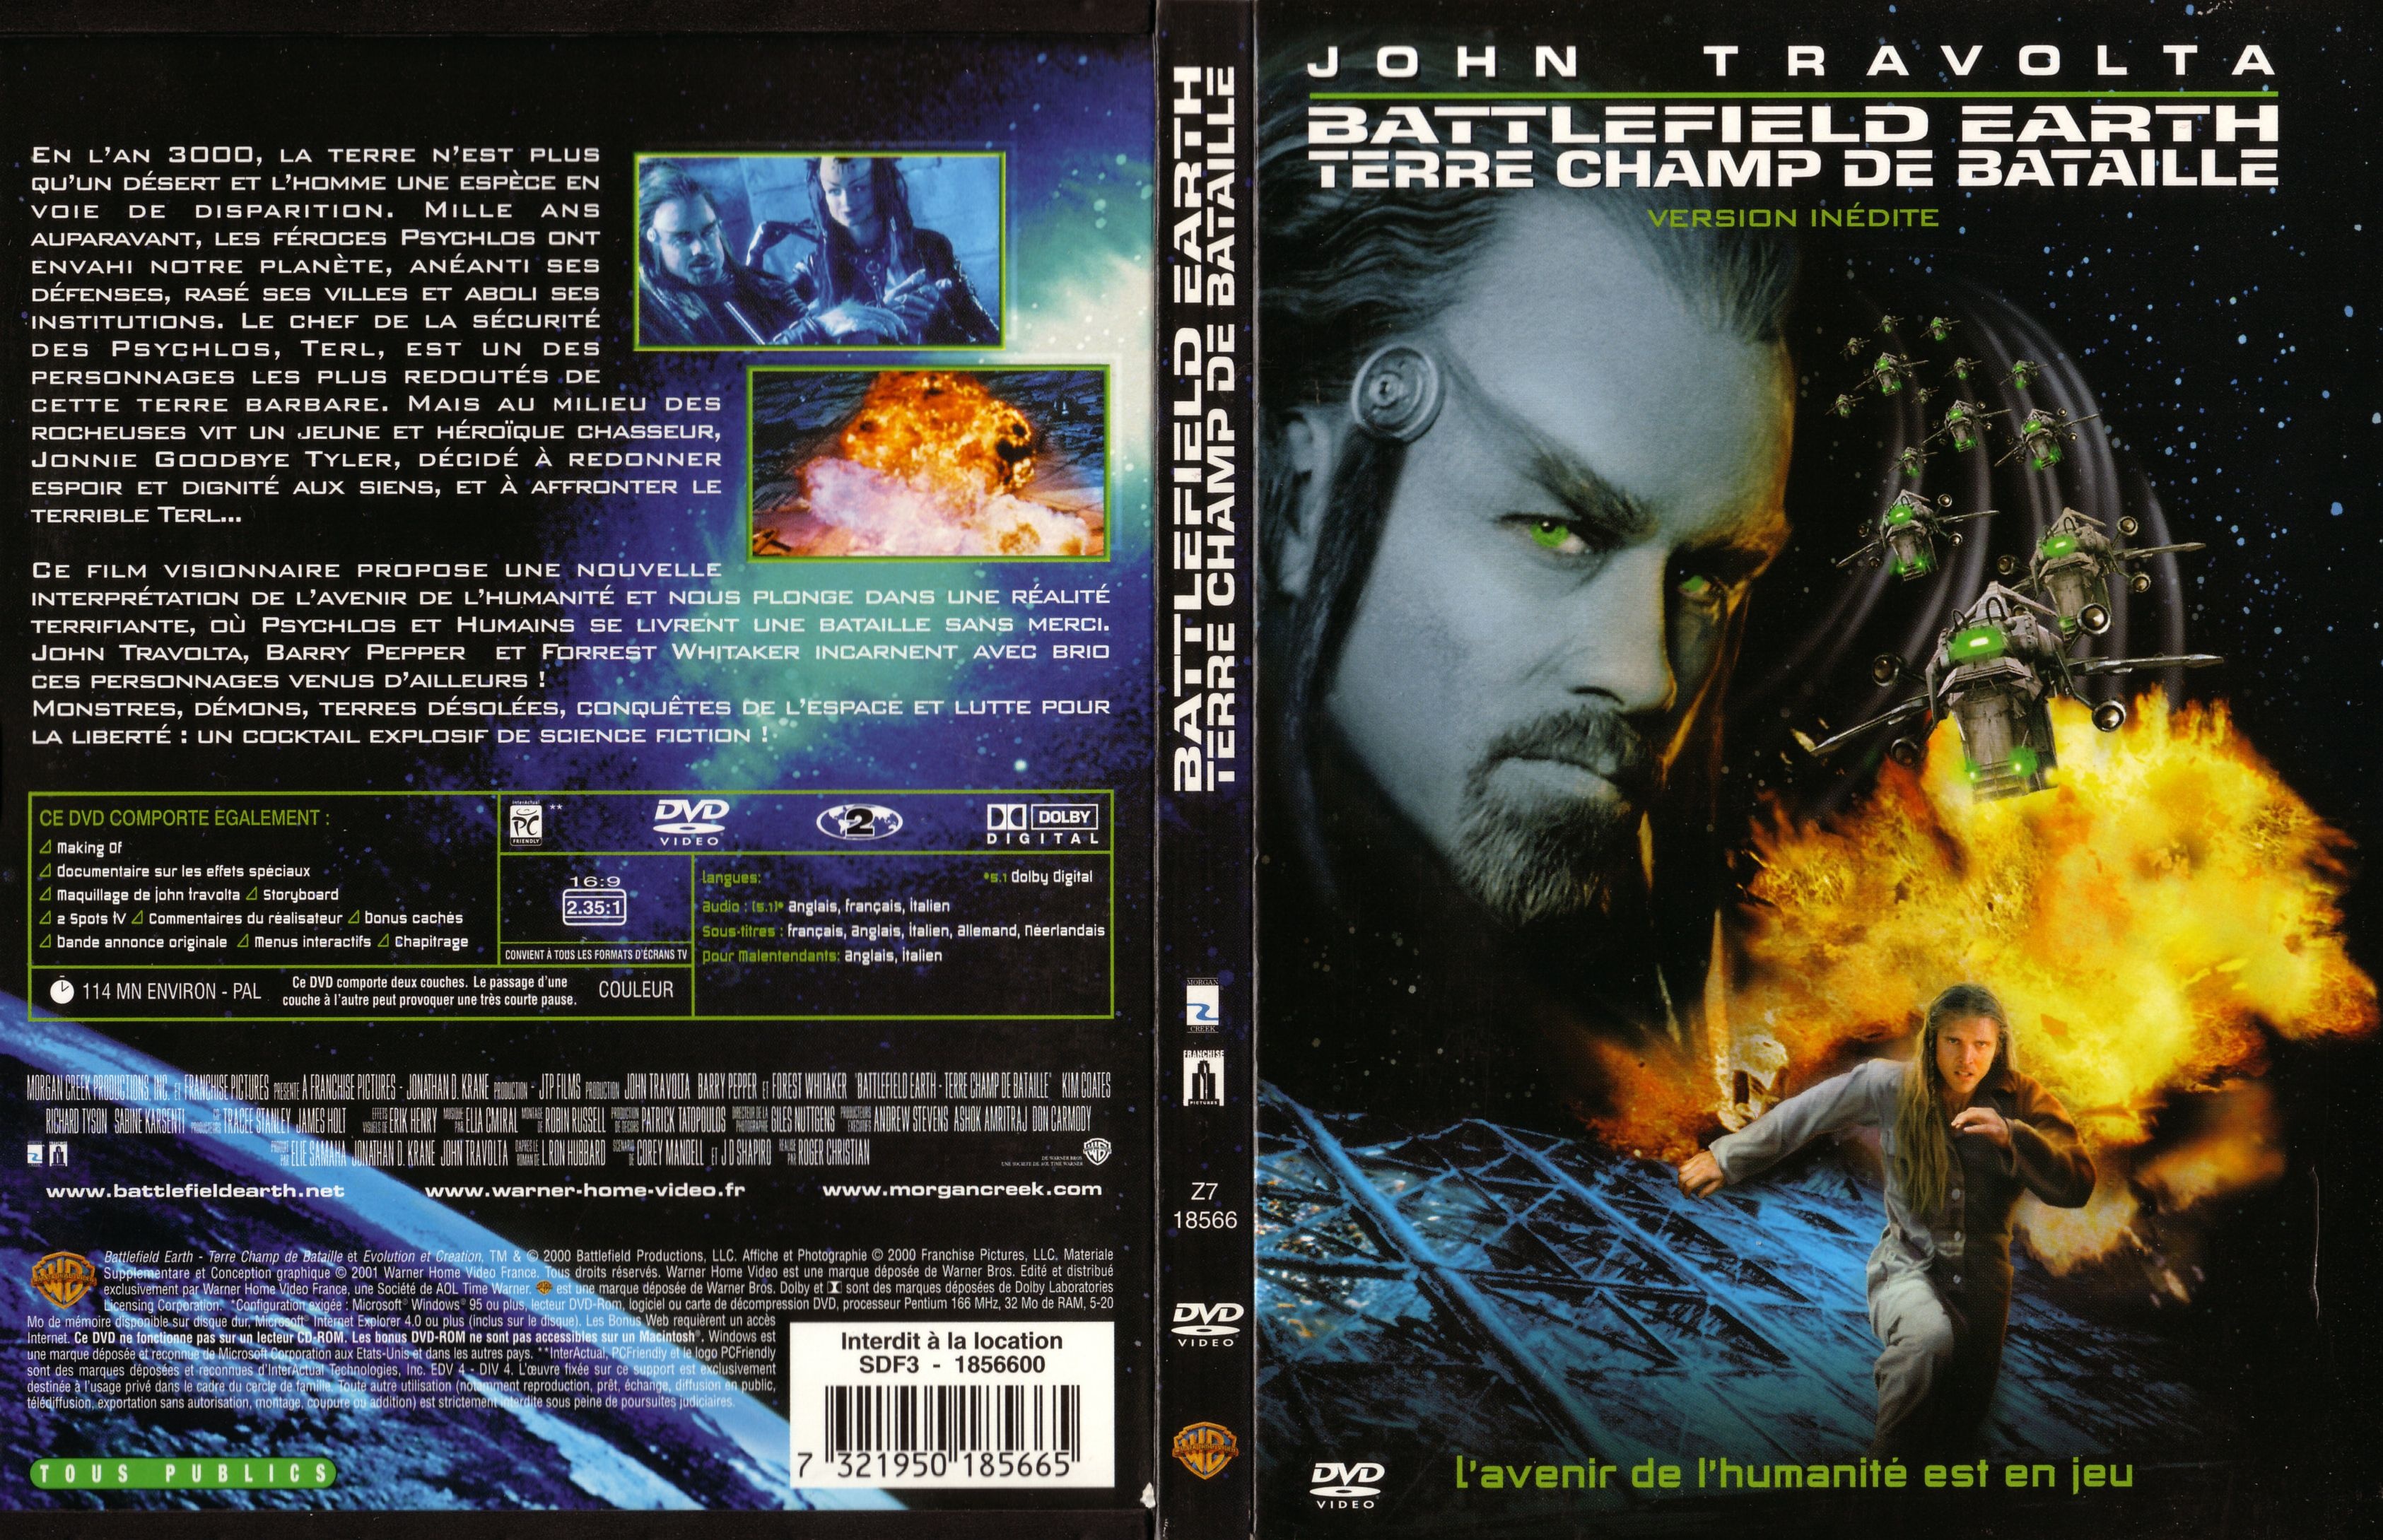 Jaquette DVD Battlefield earth v2